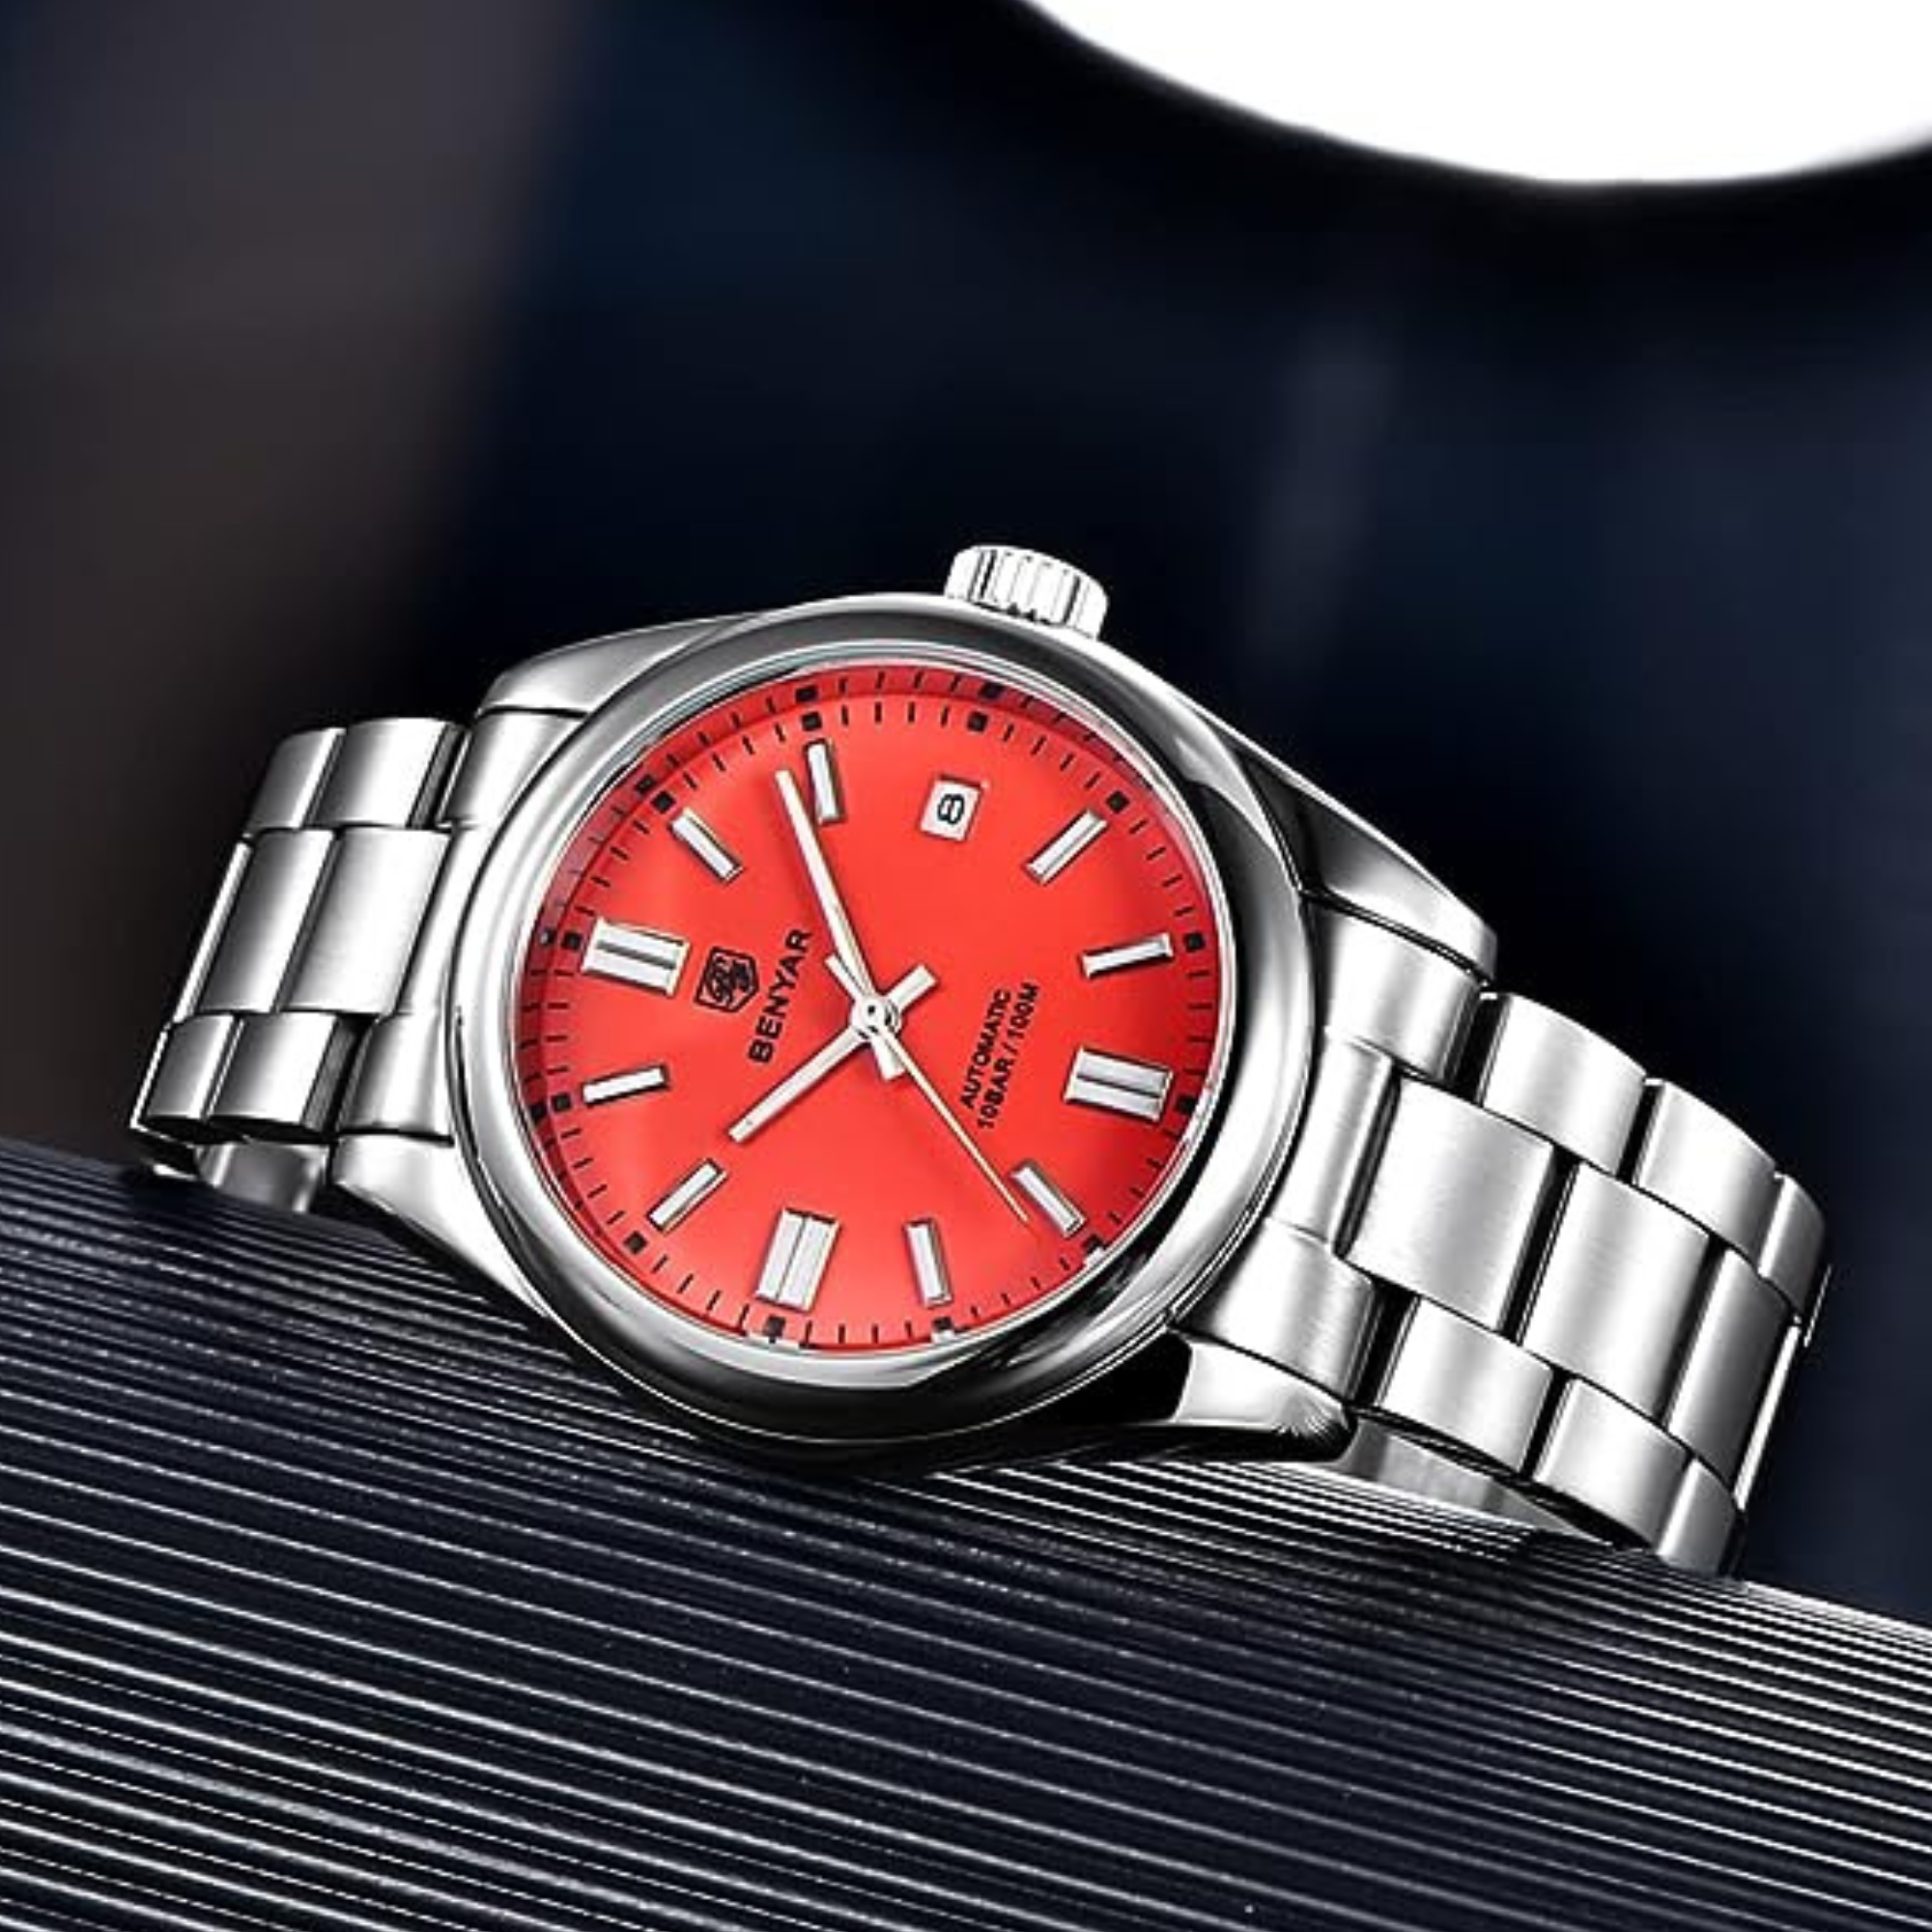 BENYAR Classic Men's  Watch Stainless Steel Strap Waterproof Luminous Simple Business Sports Wristwatch - RED Dial